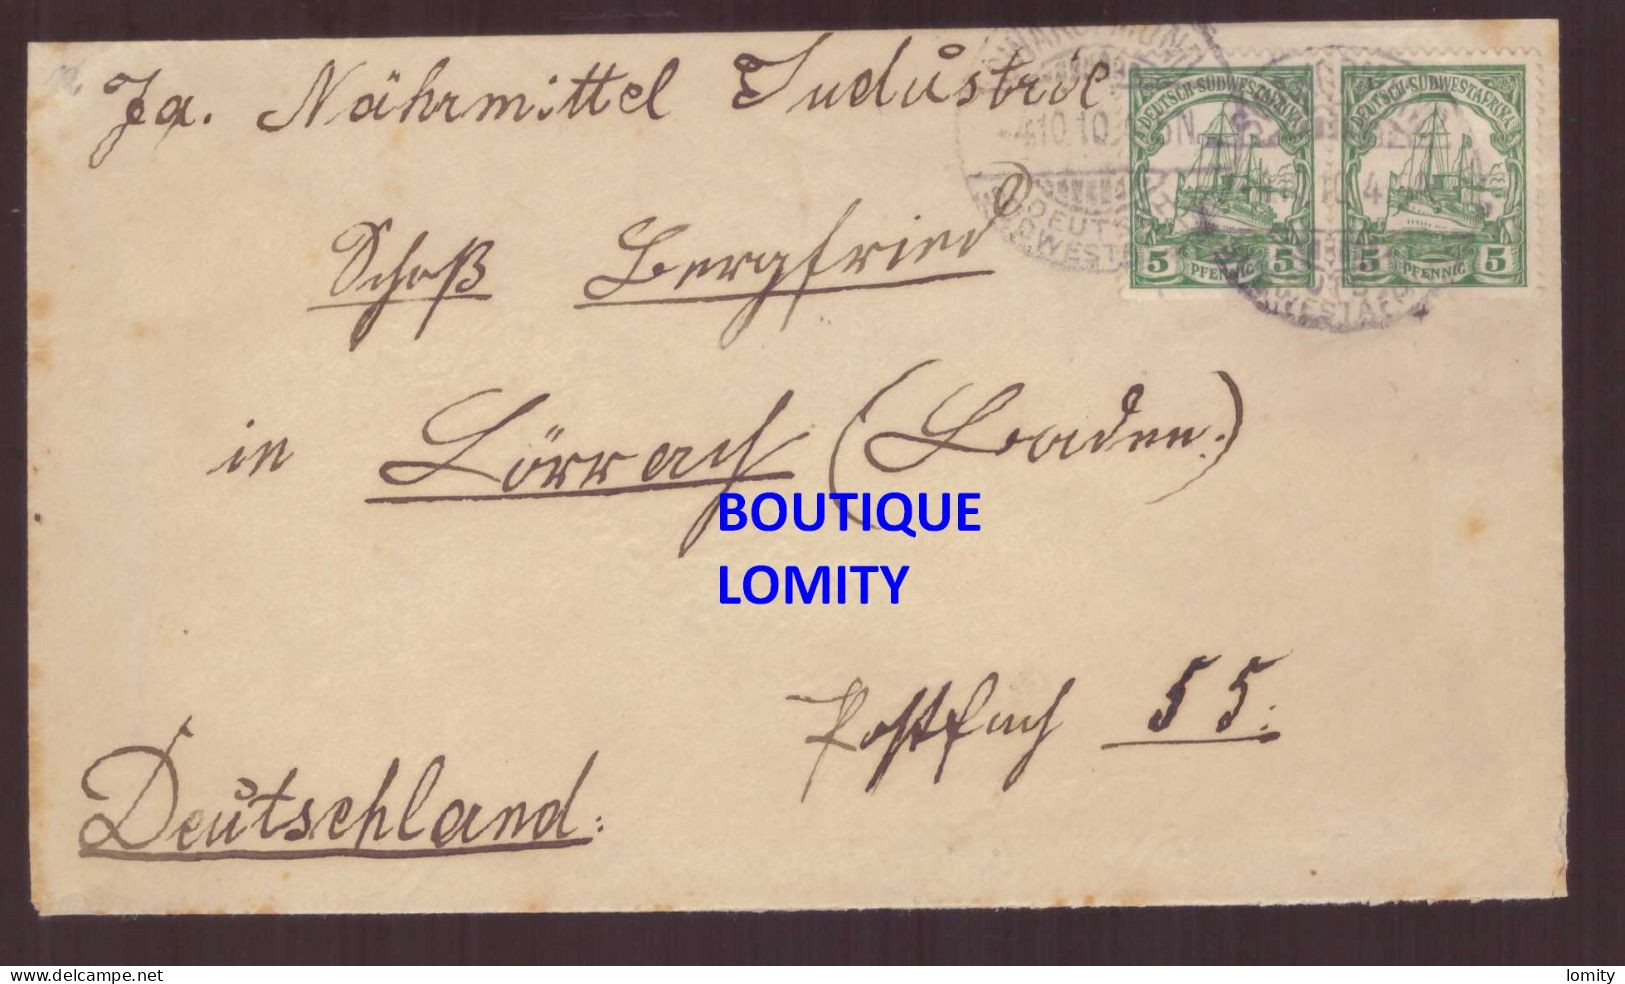 Allemagne Colonie Allemande Lettre Brief Deutsch Sud West Afrika DSWA Cachet 1910 Paire Attachée Timbres Sudwestafrika - Duits-Zuidwest-Afrika